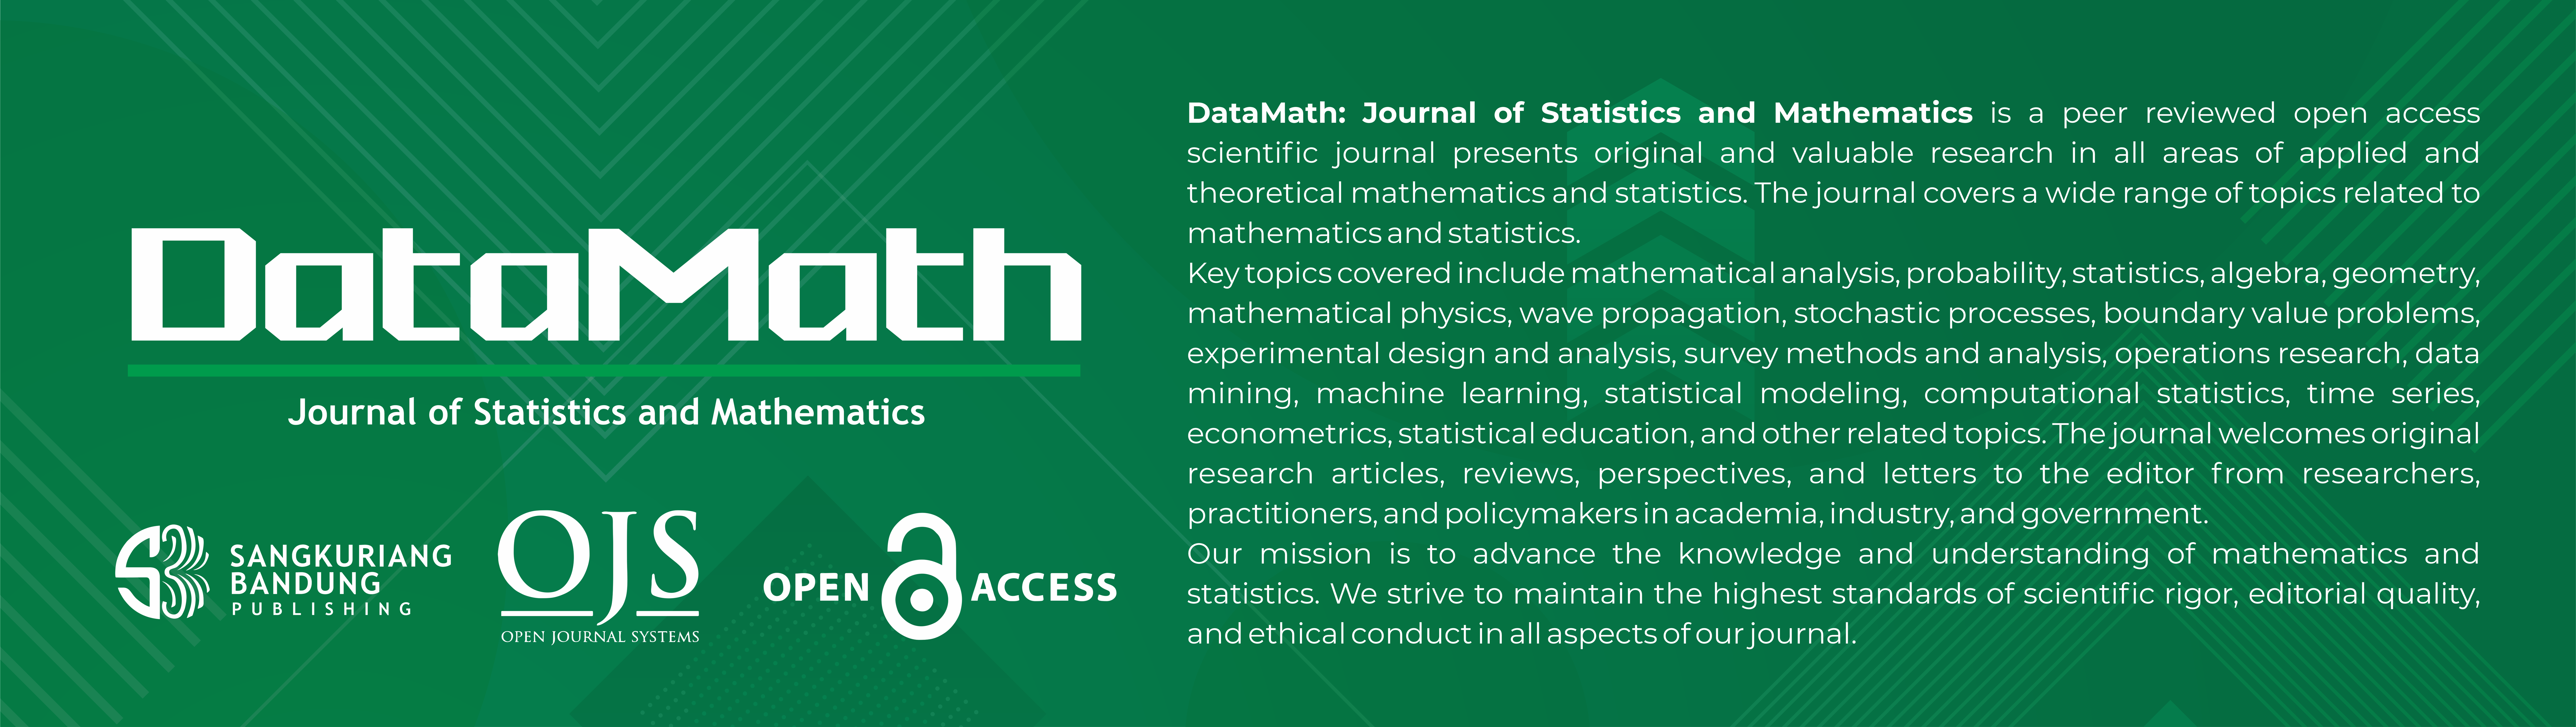 DataMath: Journal of Statistics and Mathematics